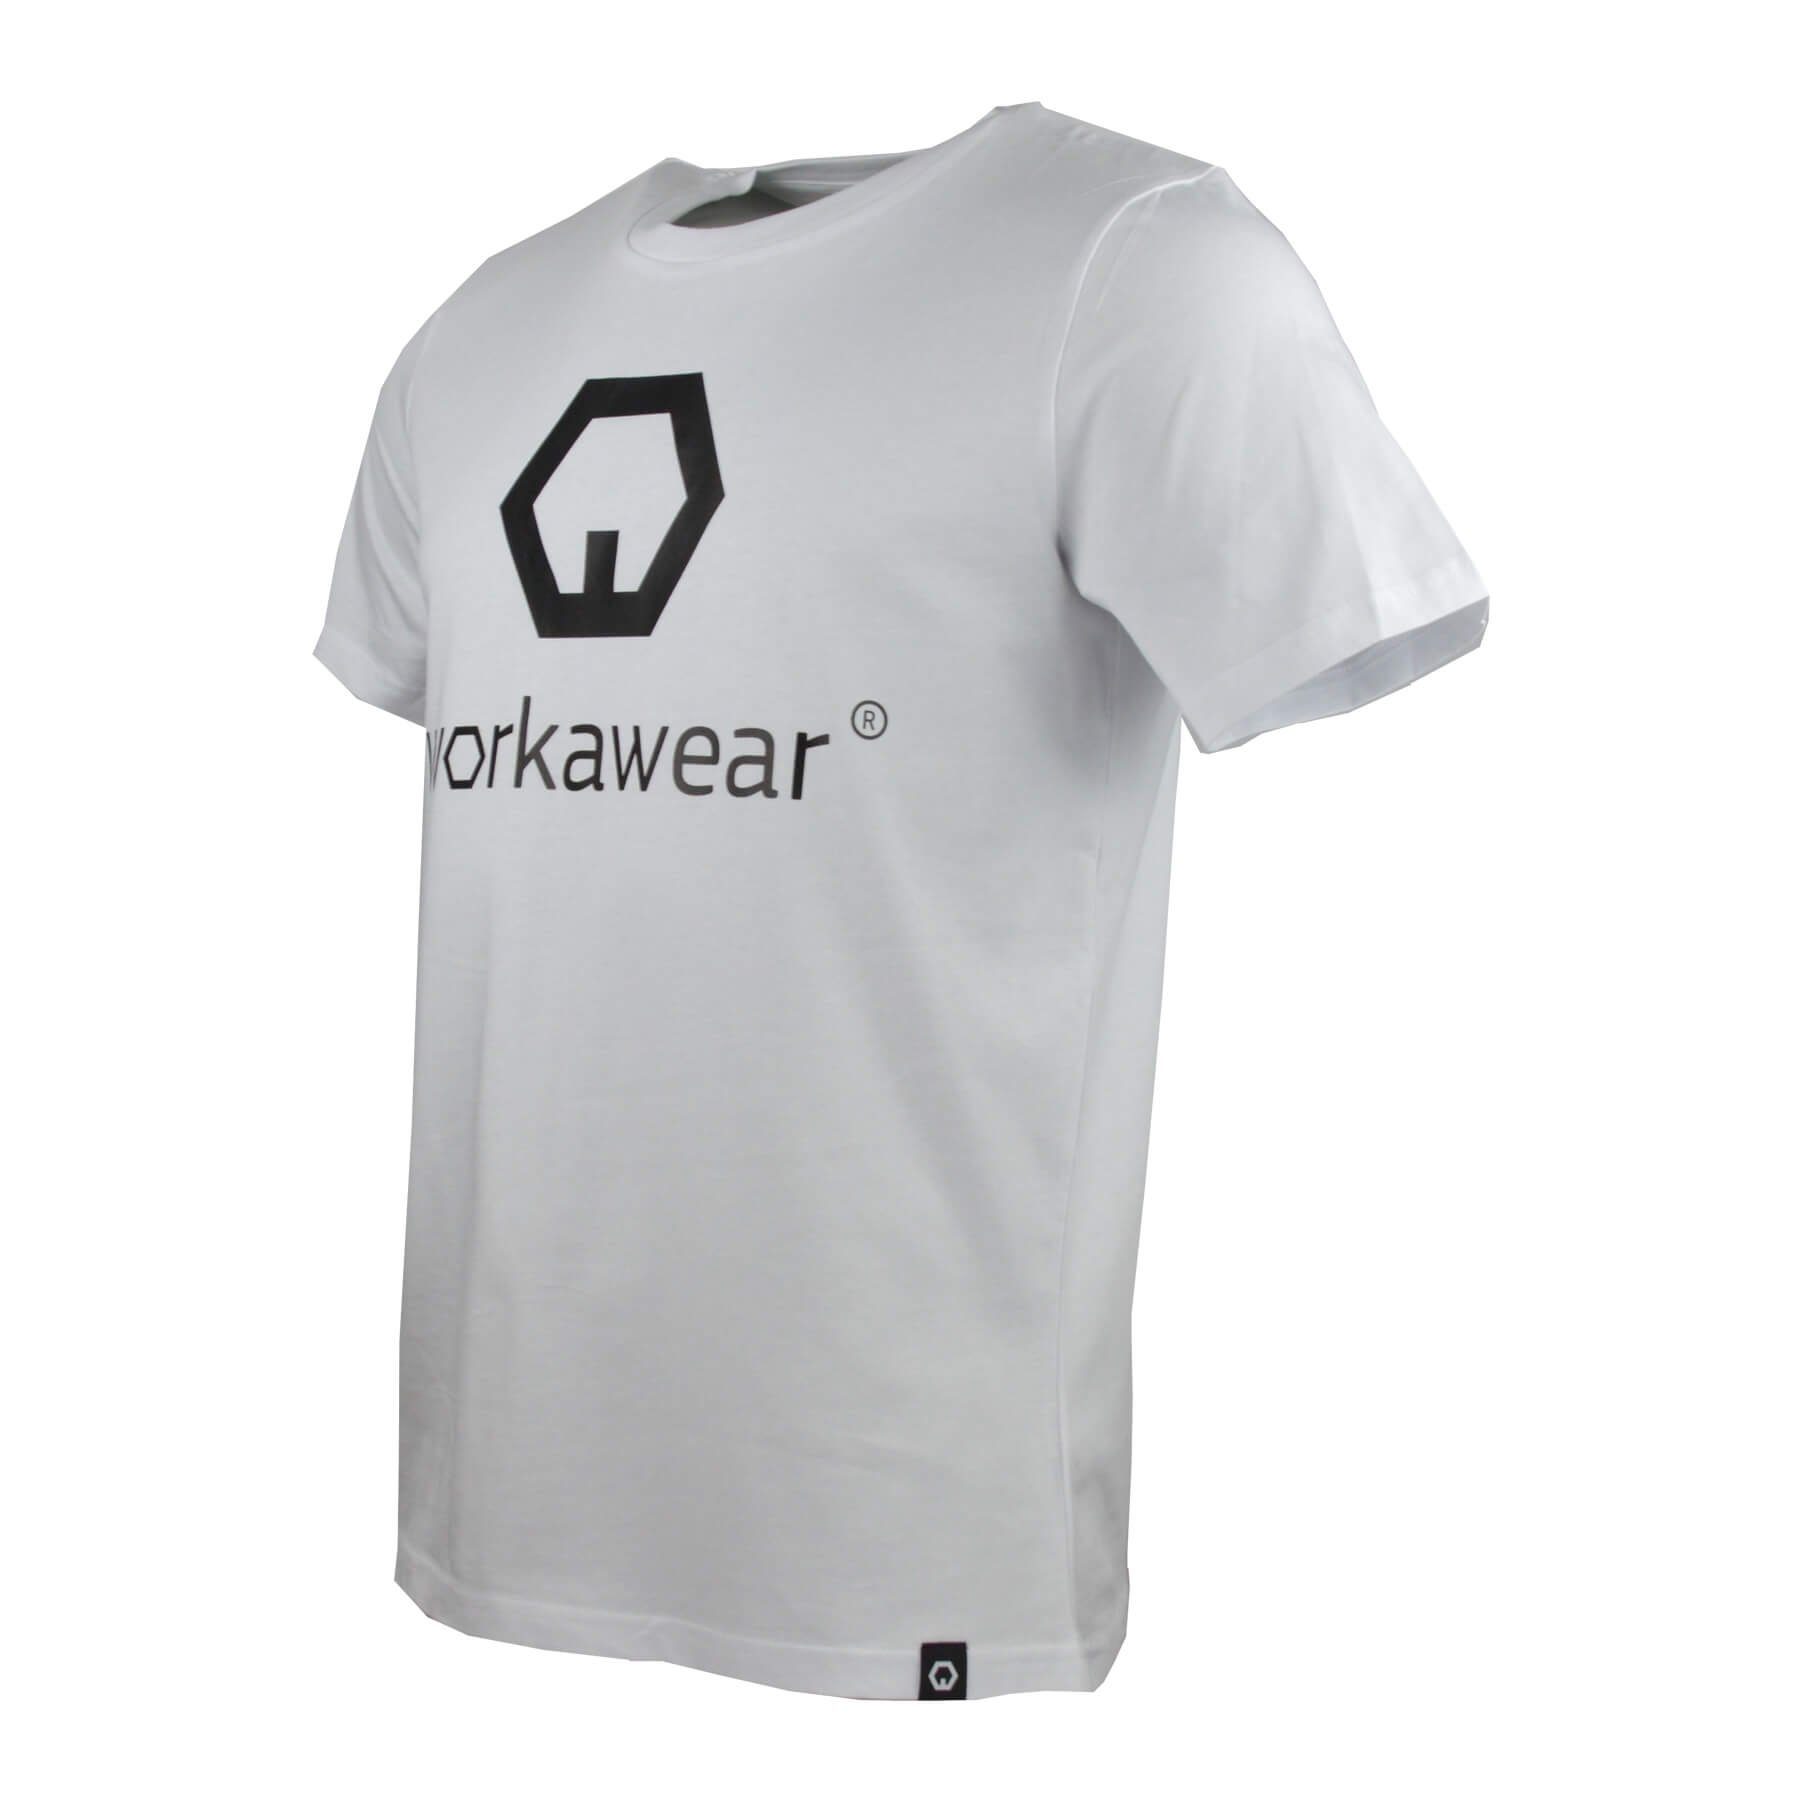 workawear T-Shirt Bio T-Shirt 100% Baumwolle, Bio nachhaltig Workawear fair &